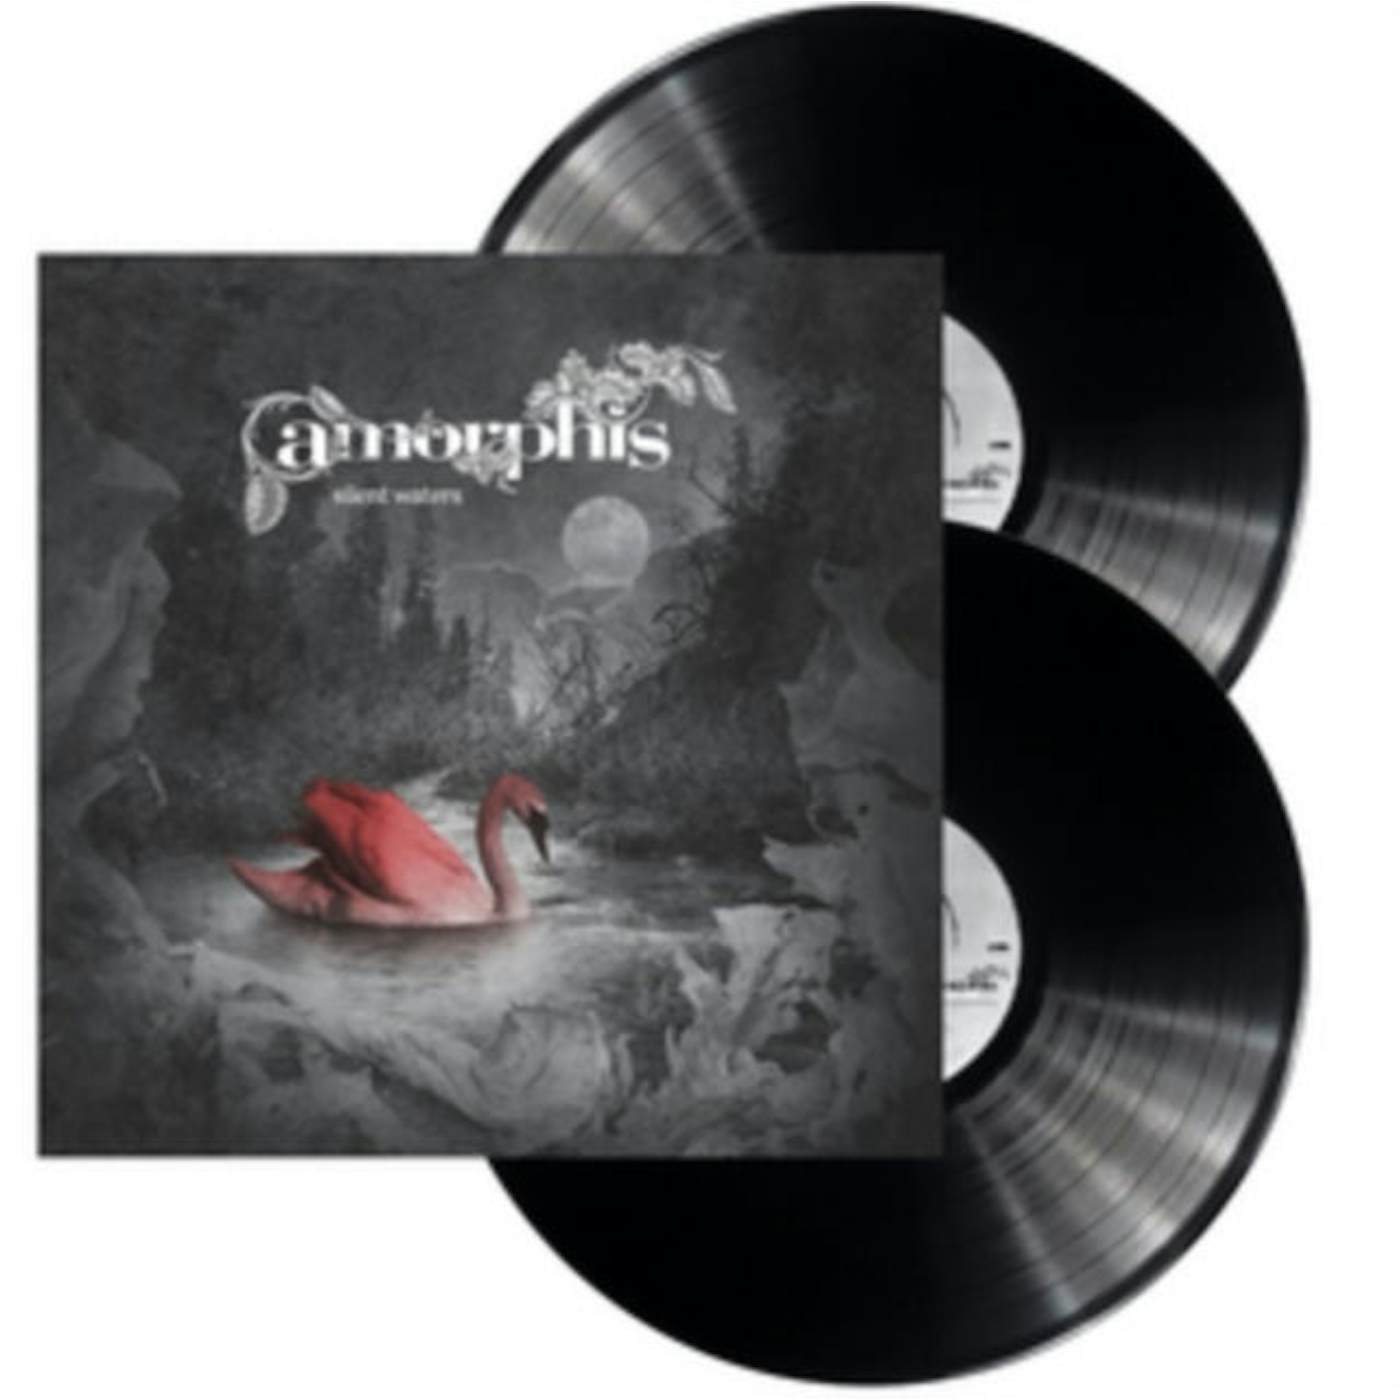 Amorphis LP Vinyl Record - Silent Waters